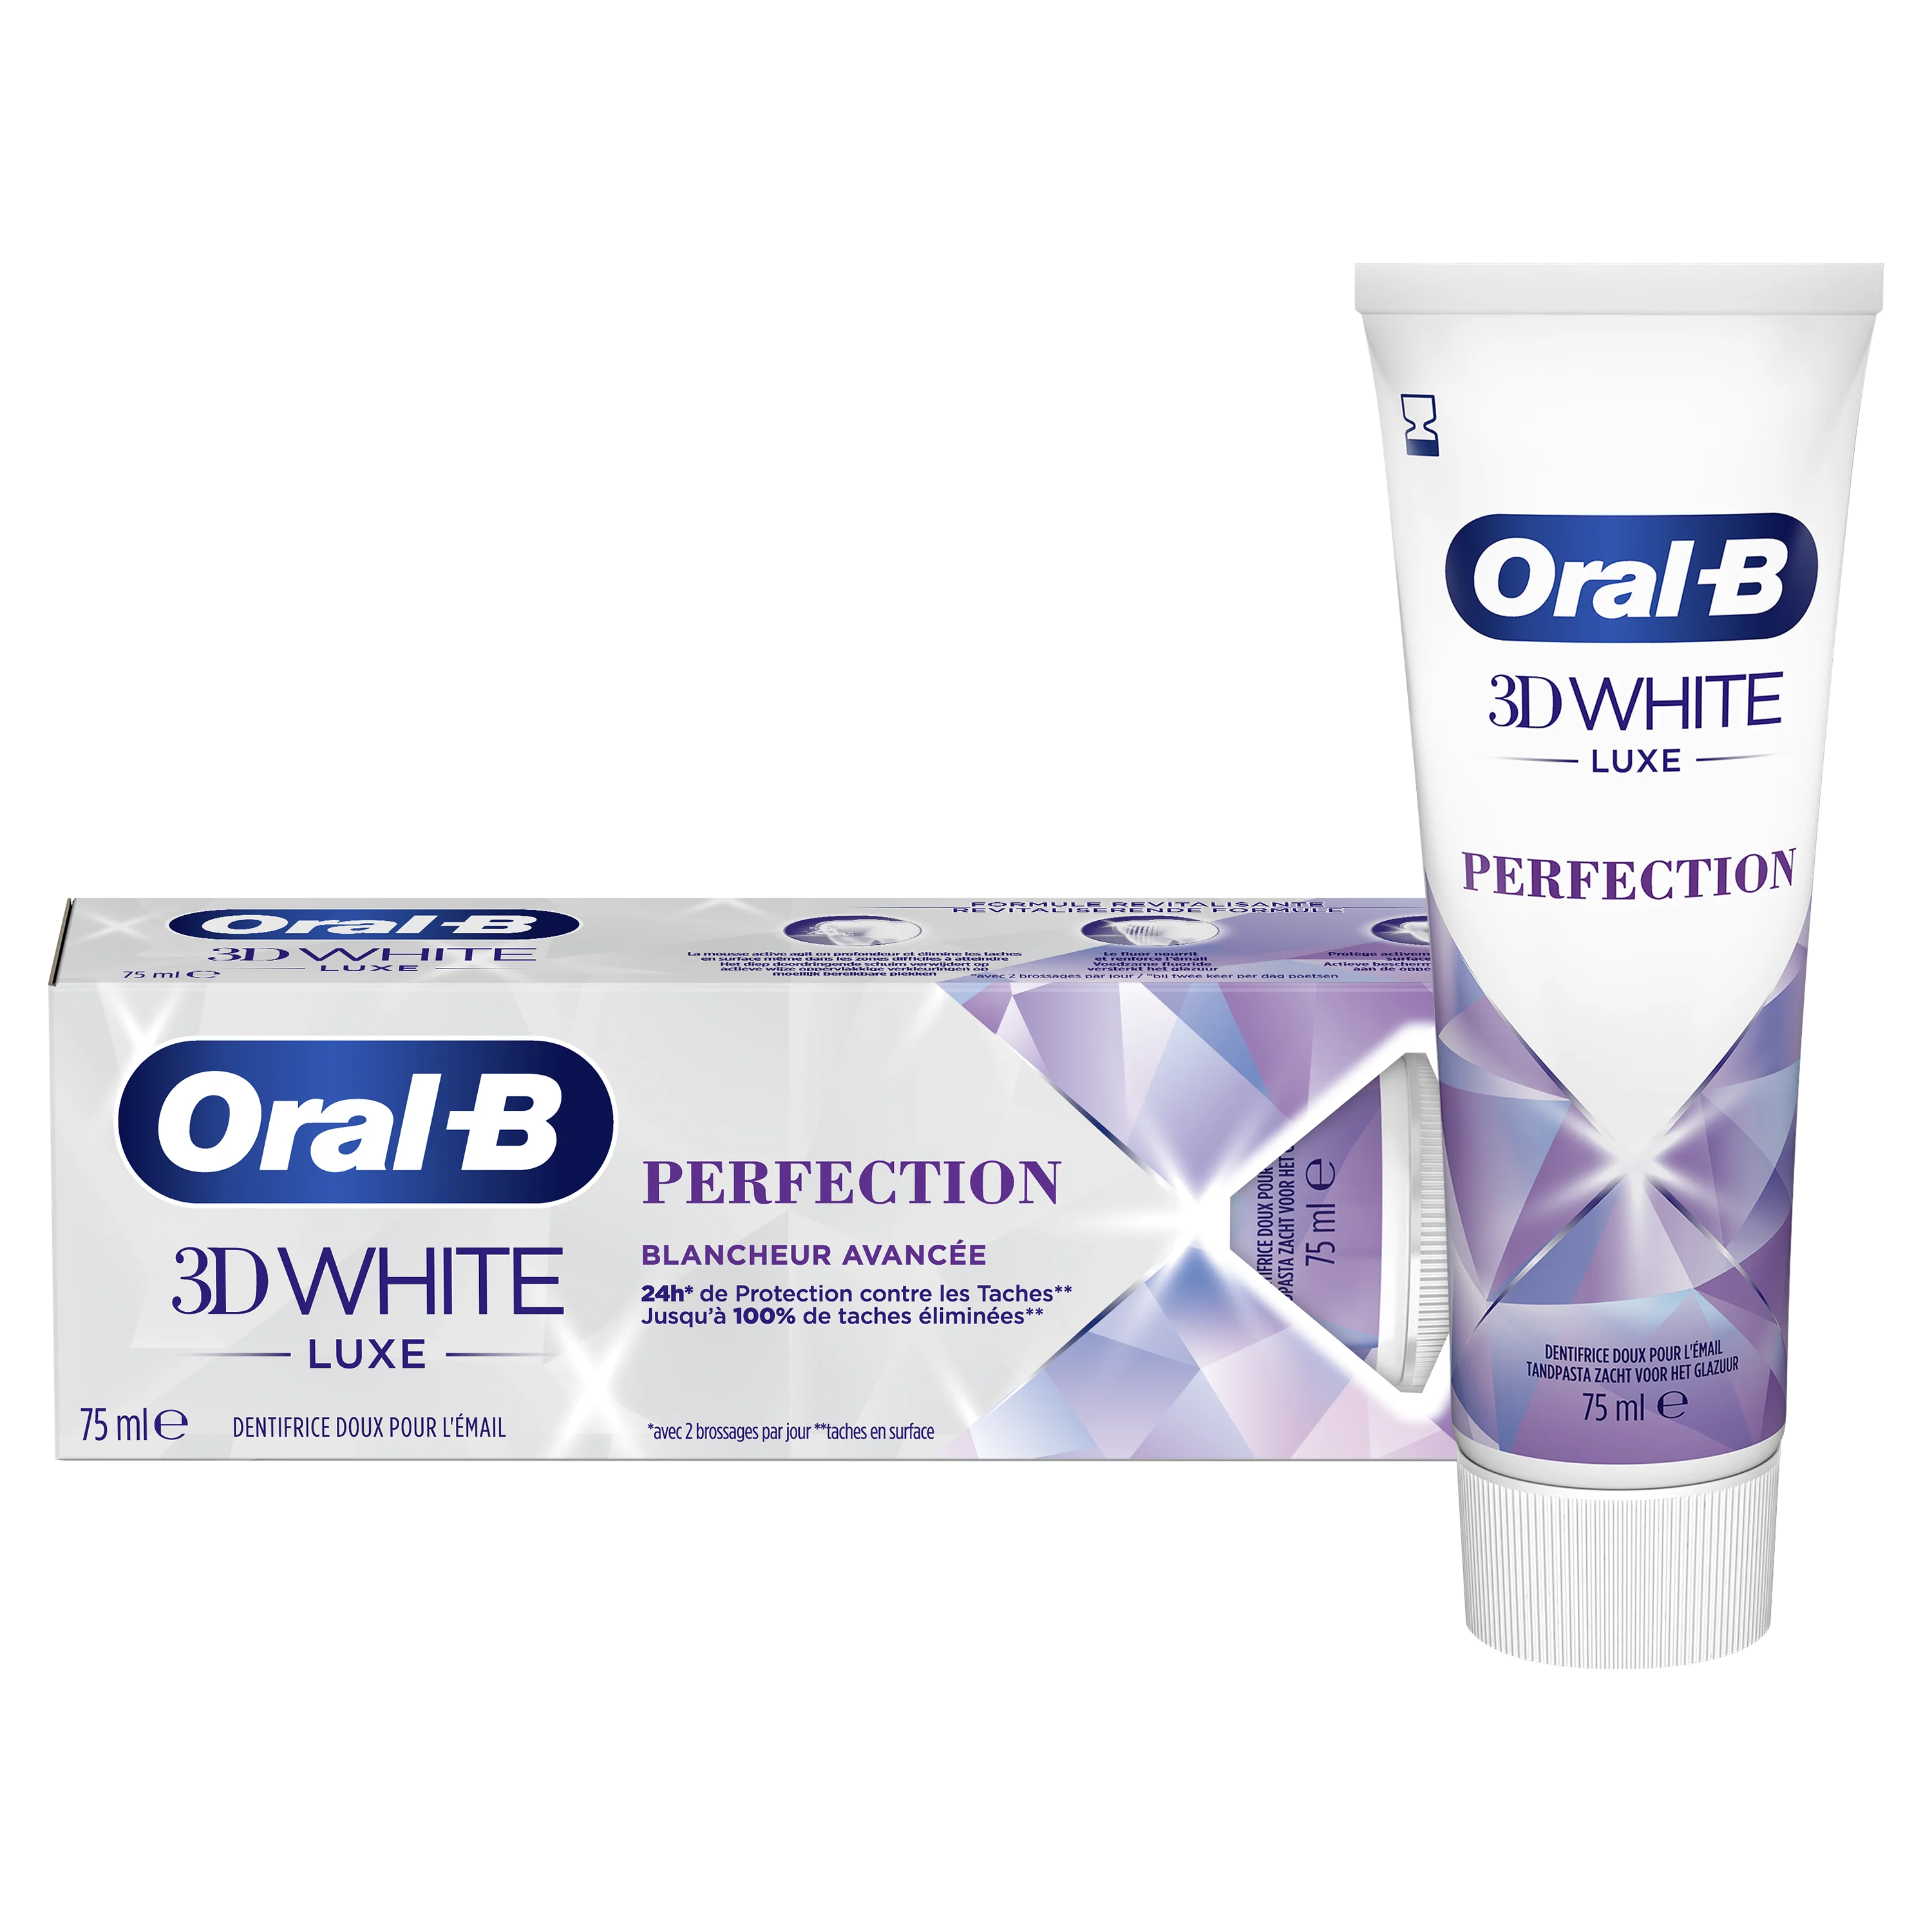 zweep Portiek Efficiënt Oral-B 3D White Luxe Perfection Tandpasta | Oral-B